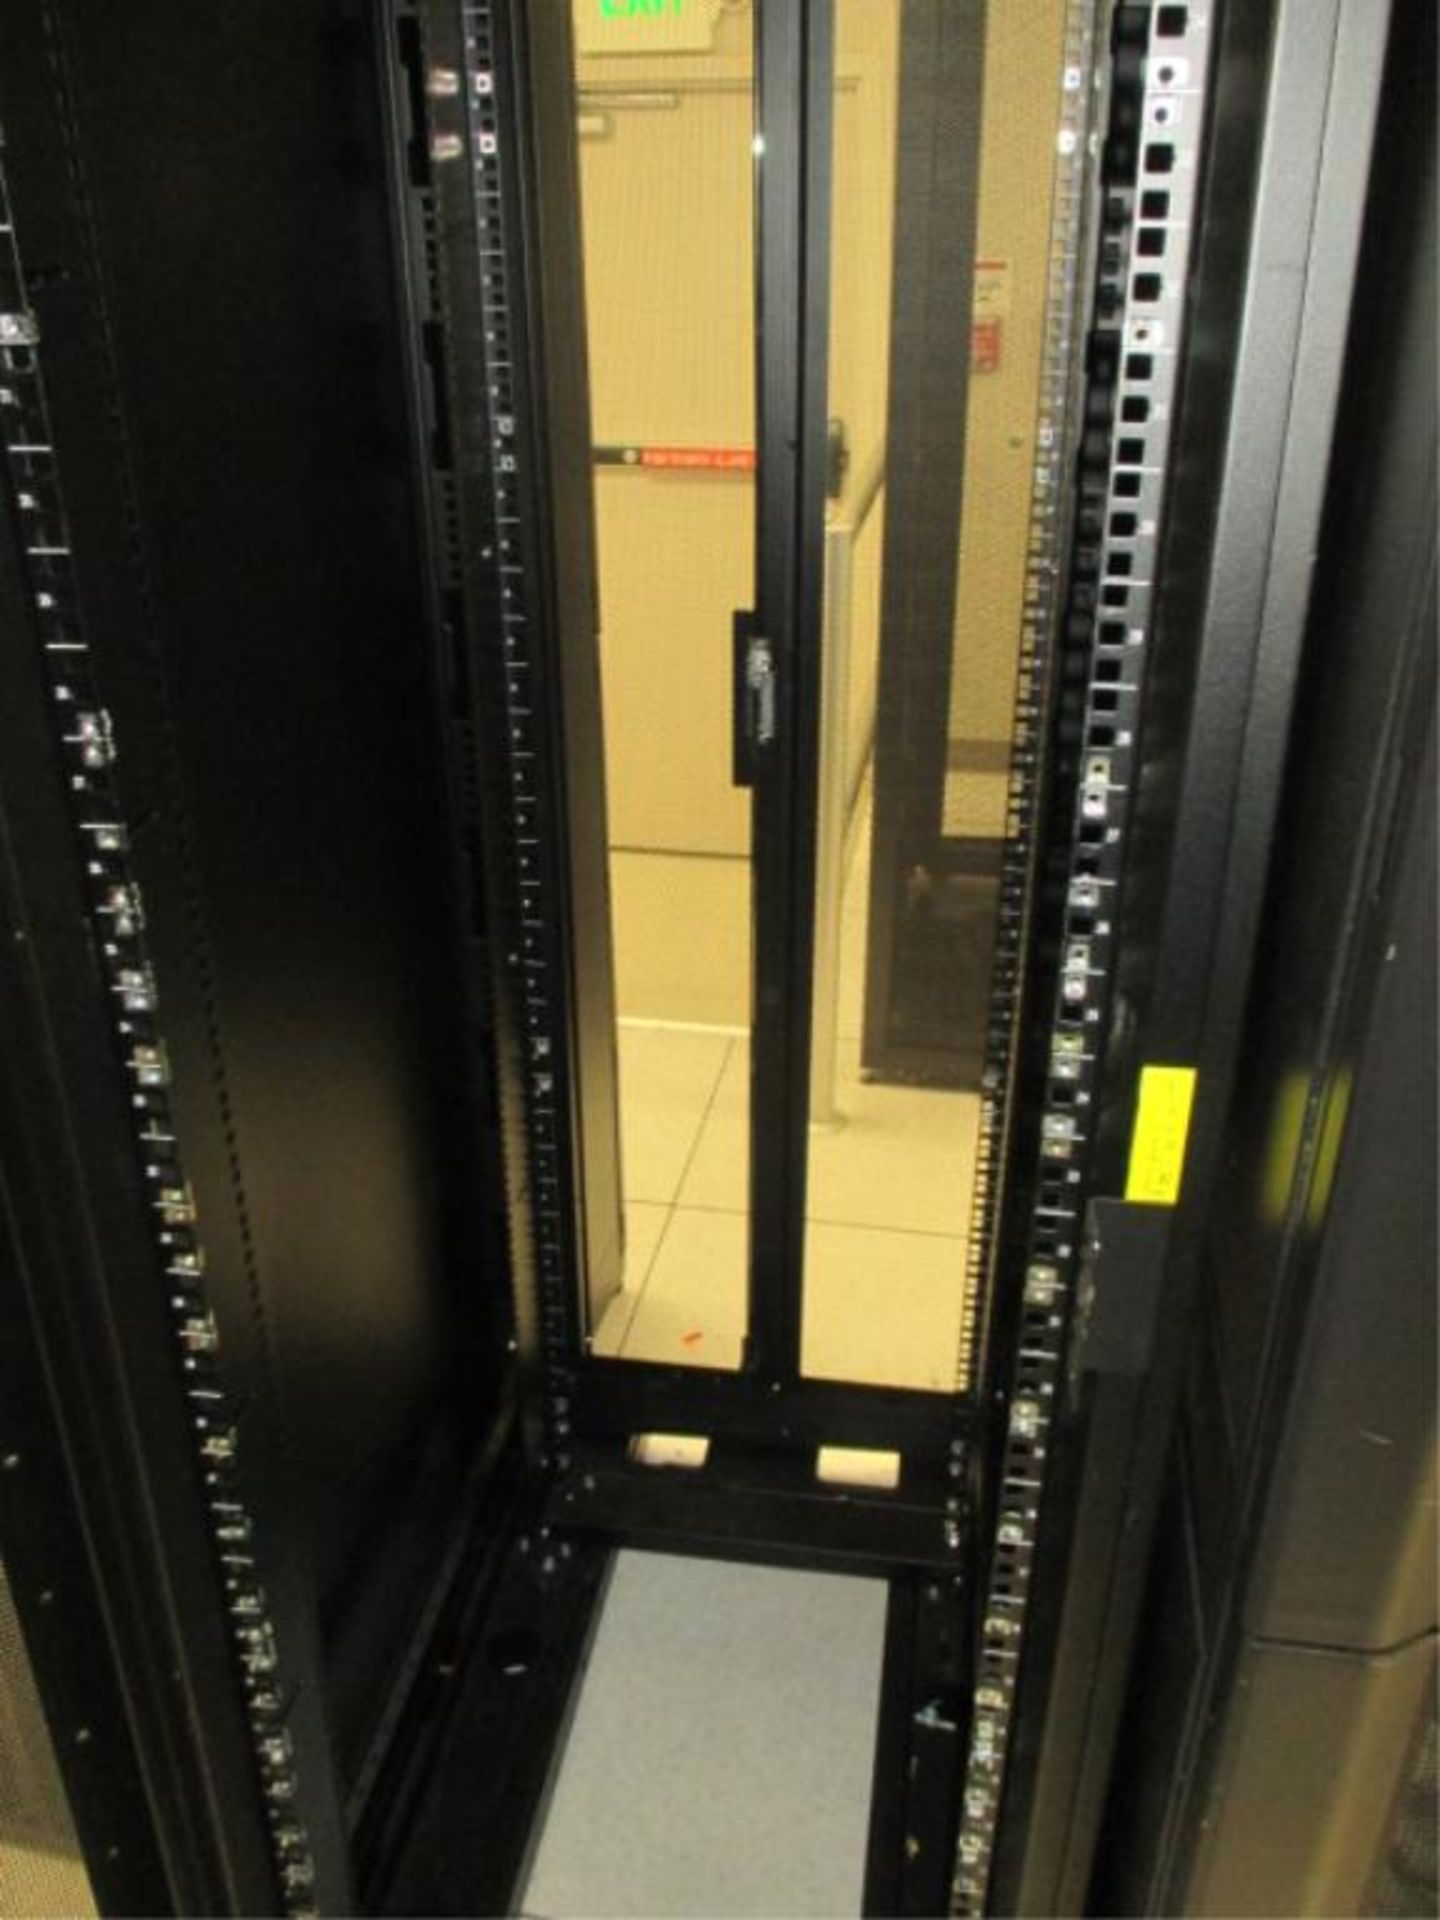 4 Schneider Server Racks - Image 2 of 3